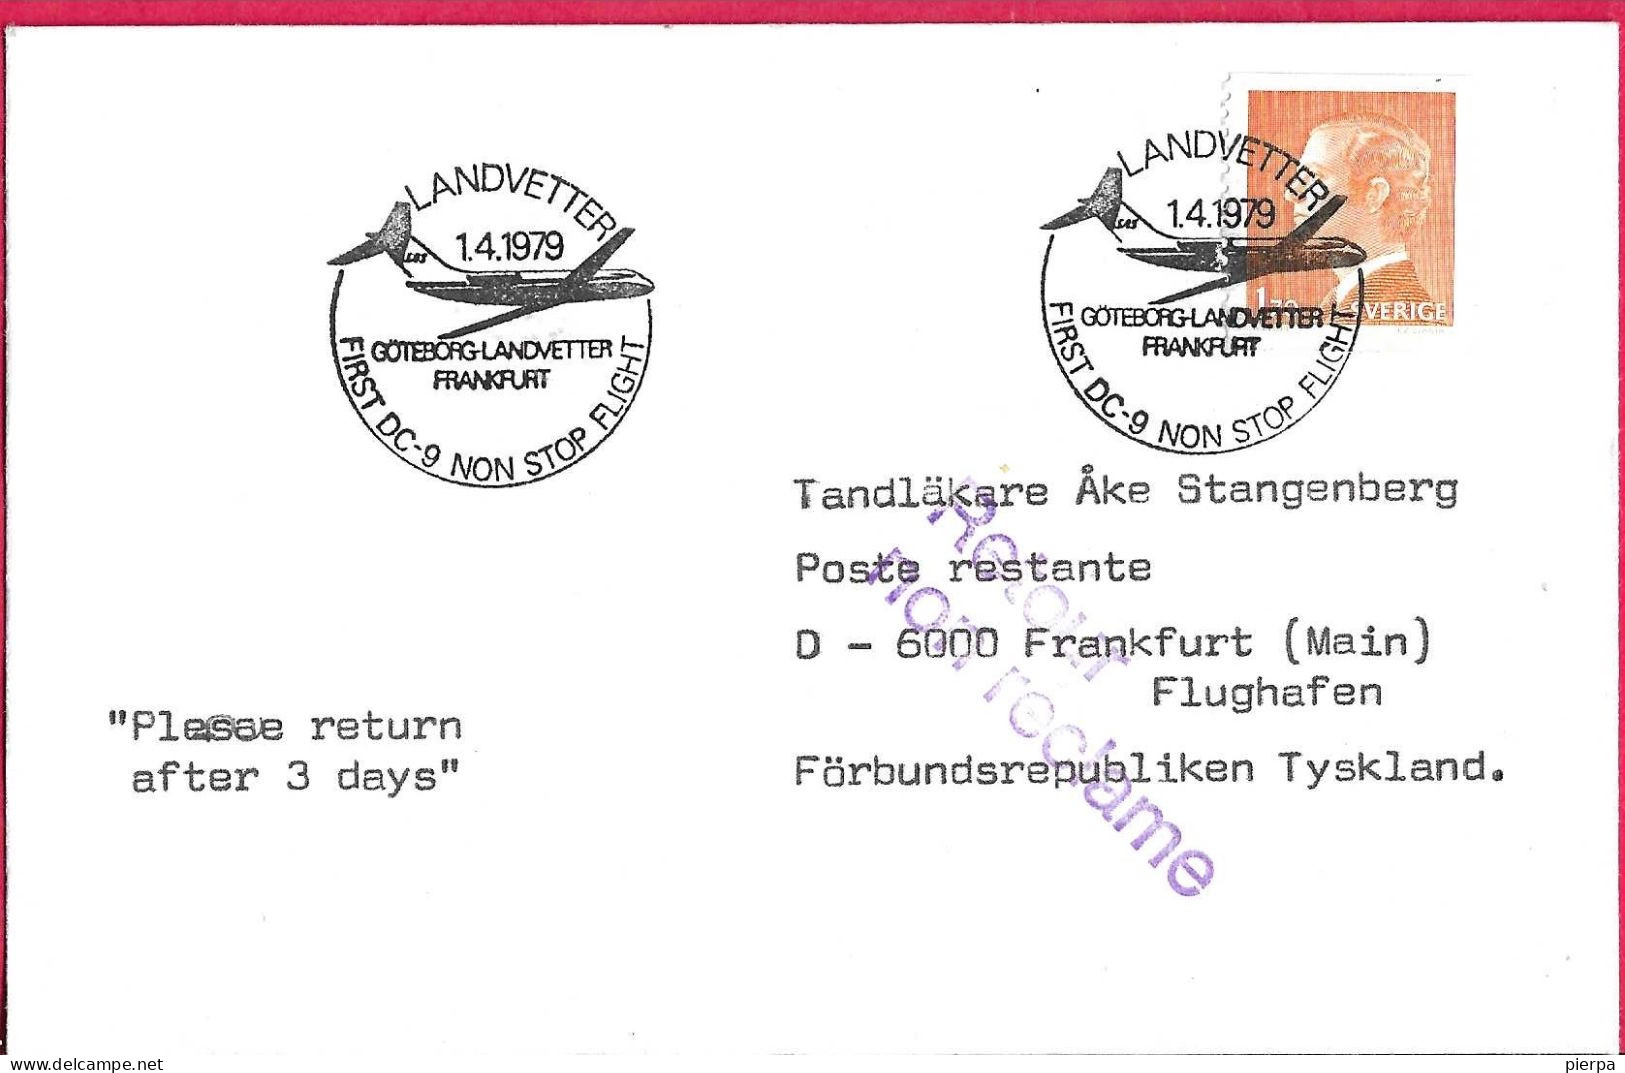 SVERIGE - FIRST DC-9 NON STOP FLIGHT FROM GOTEBORG TO FRANKFURT * 1.4.1979* ON OFFICIAL ENVELOPE - Briefe U. Dokumente